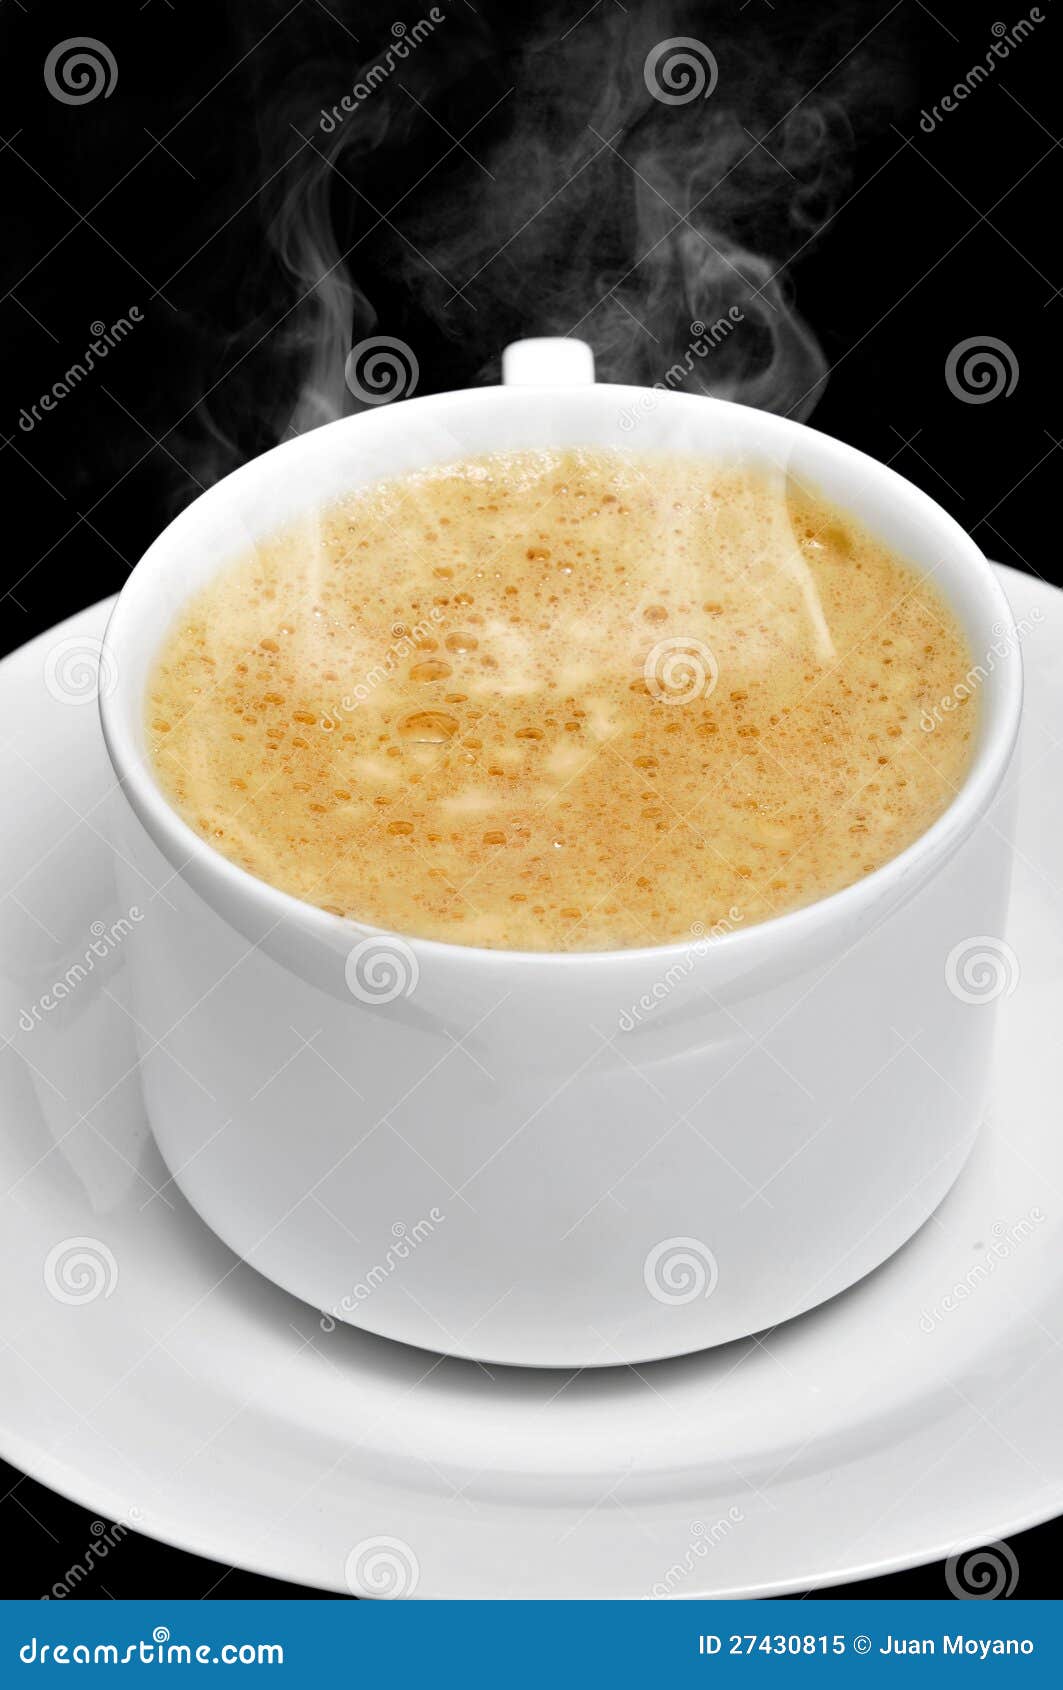 caffe latte